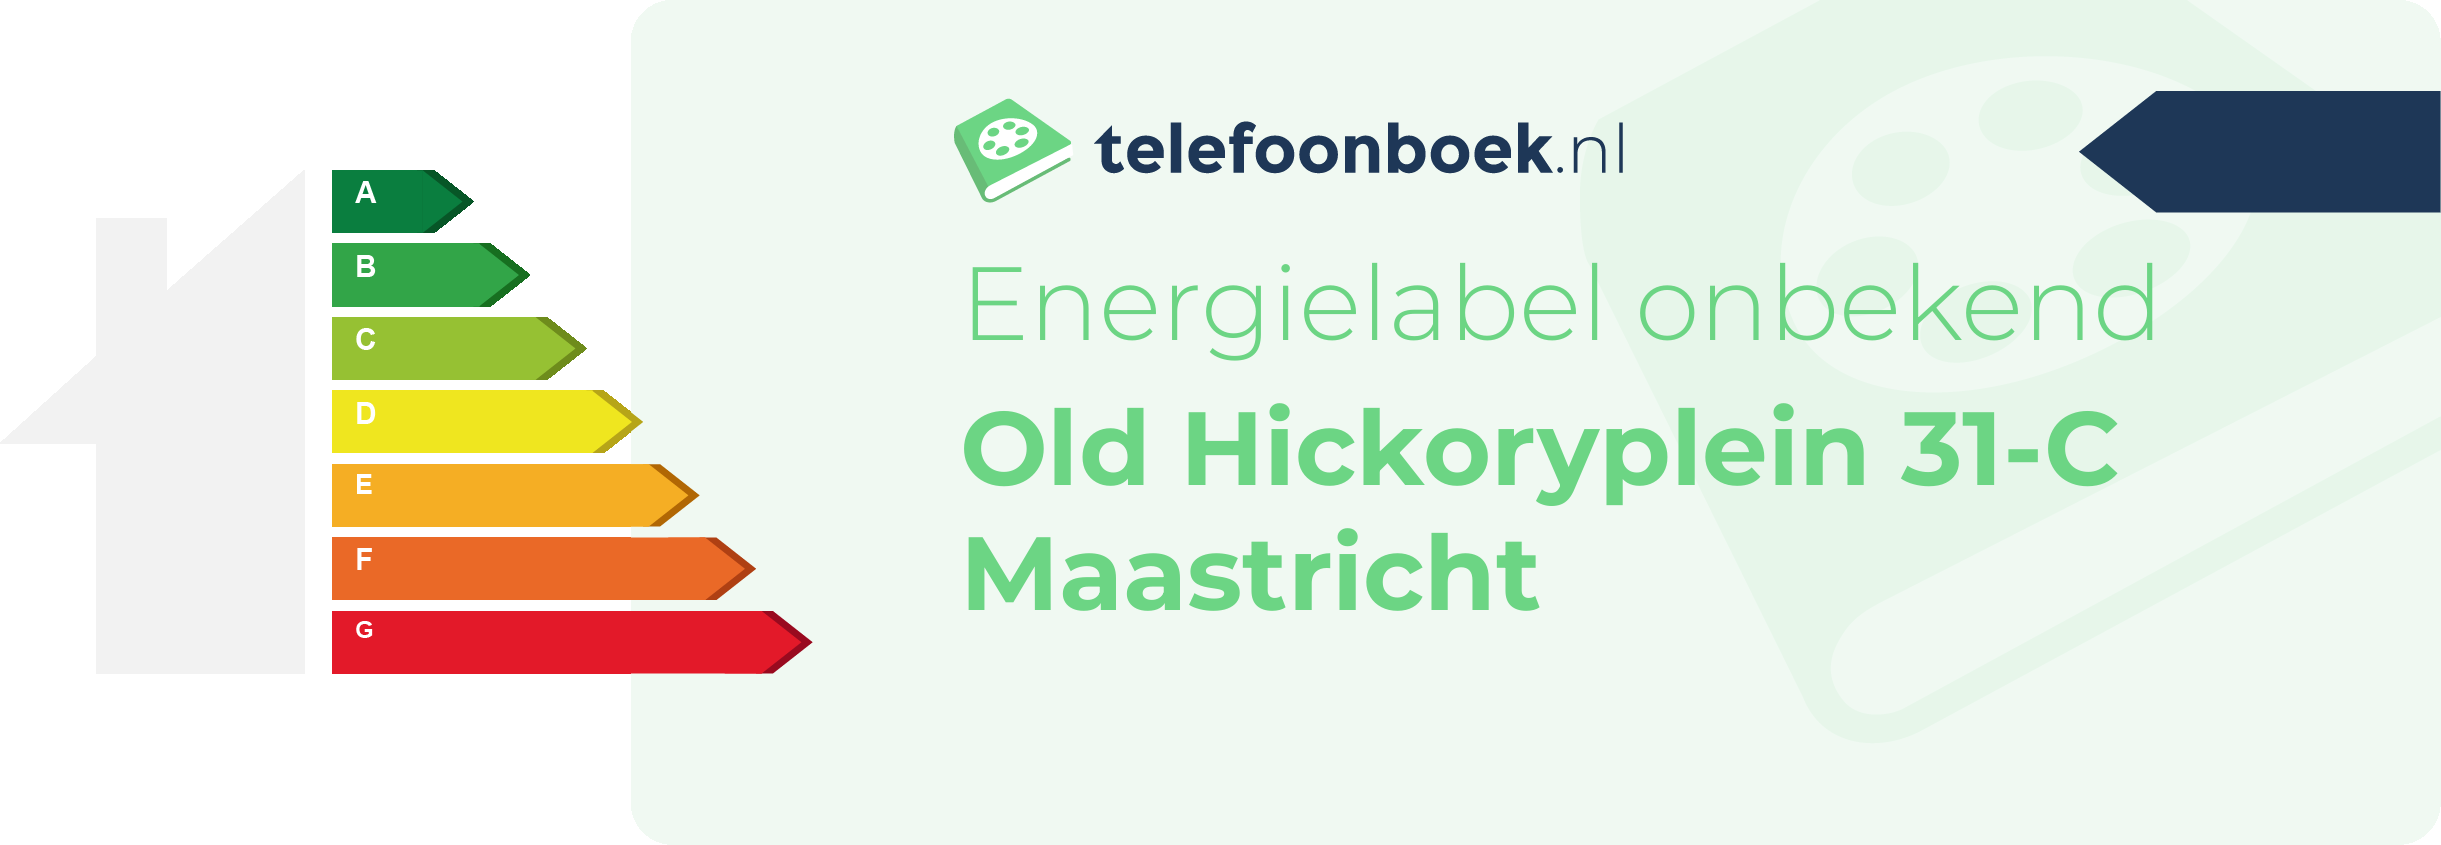 Energielabel Old Hickoryplein 31-C Maastricht